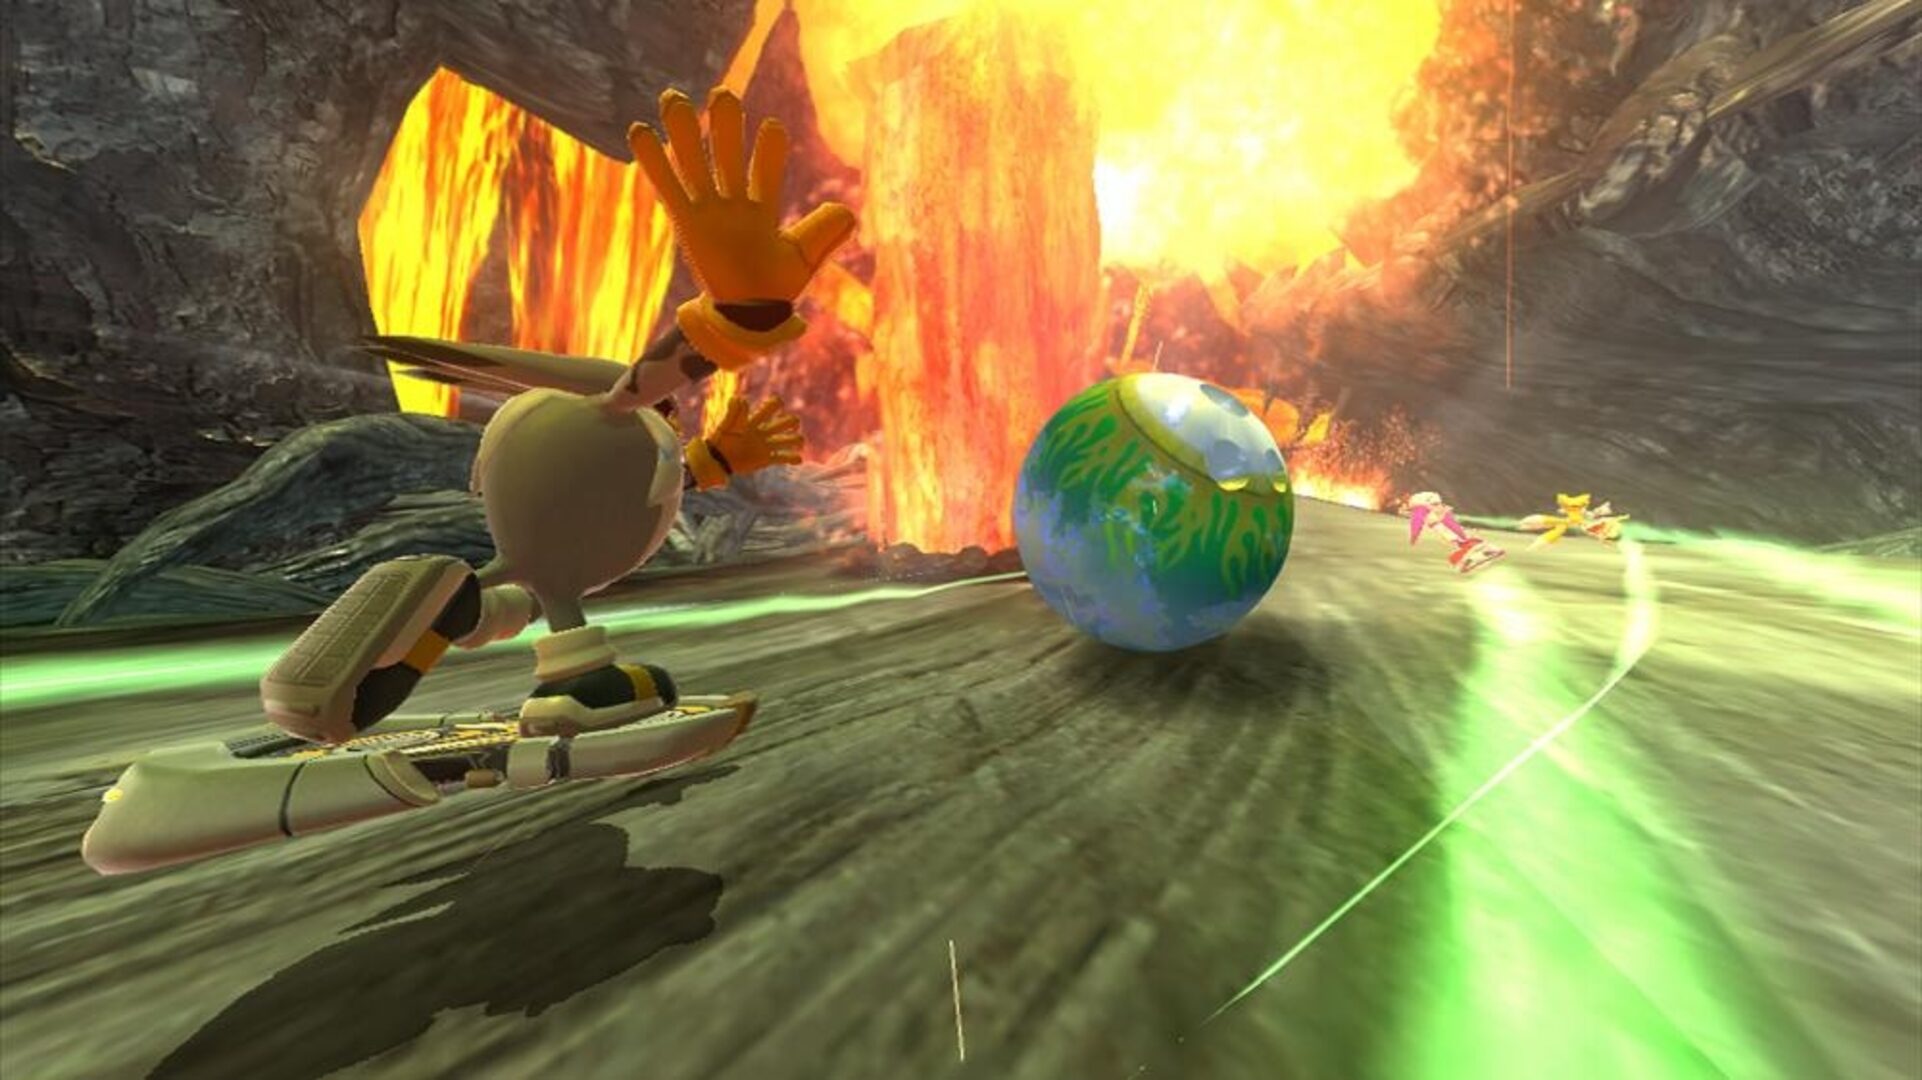 Sonic Free Riders Xbox 360 Original (Mídia Digital) – Games Matrix